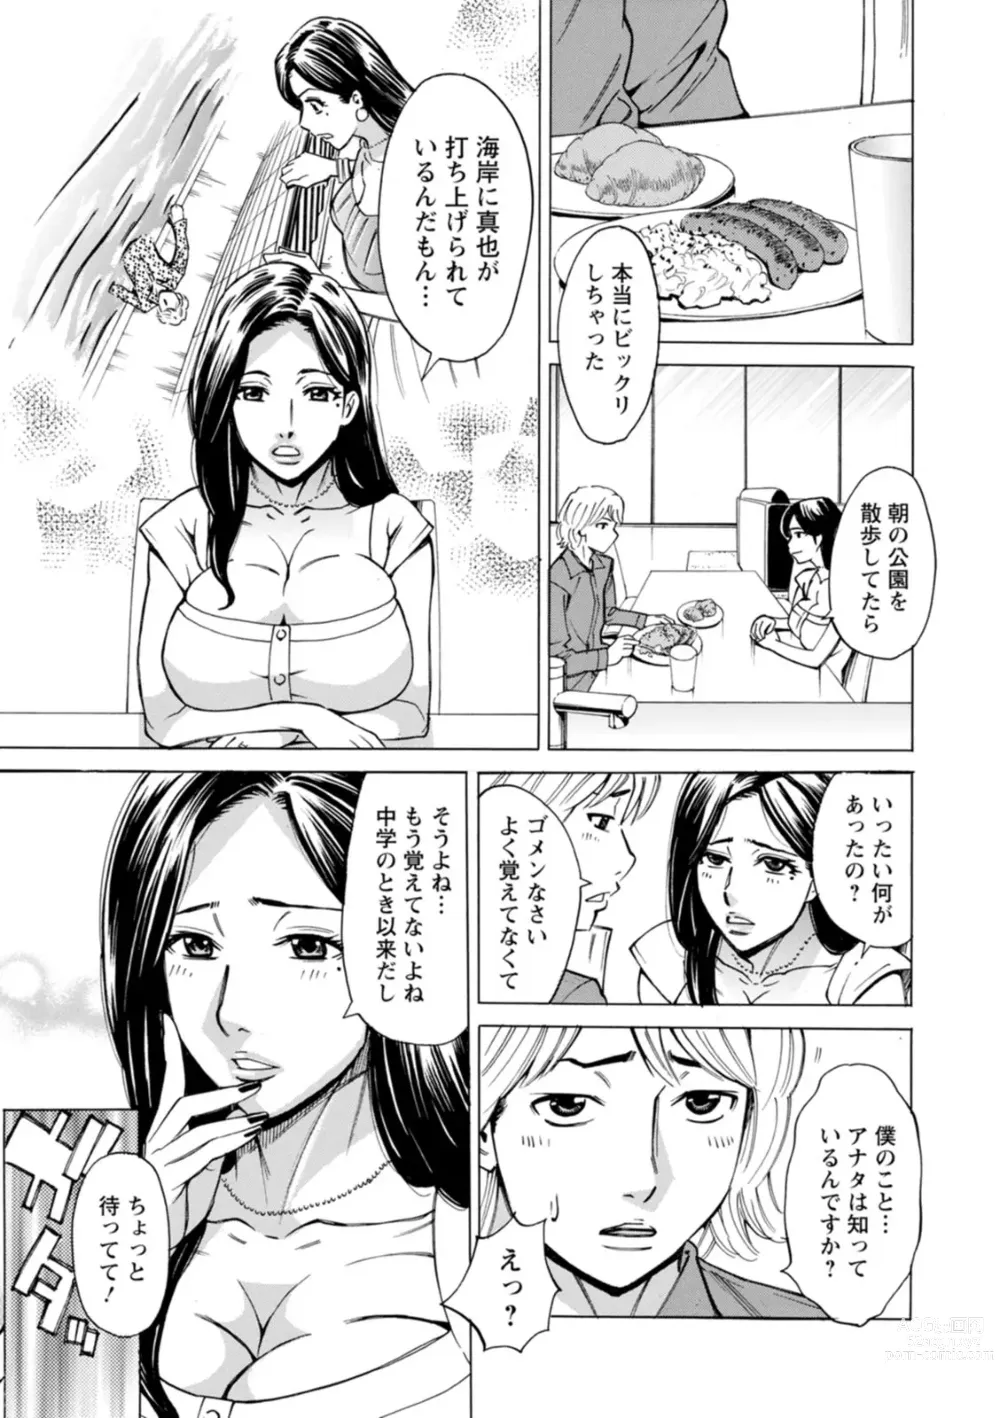 Page 9 of manga Furidashinimodoru - Back to Square One -